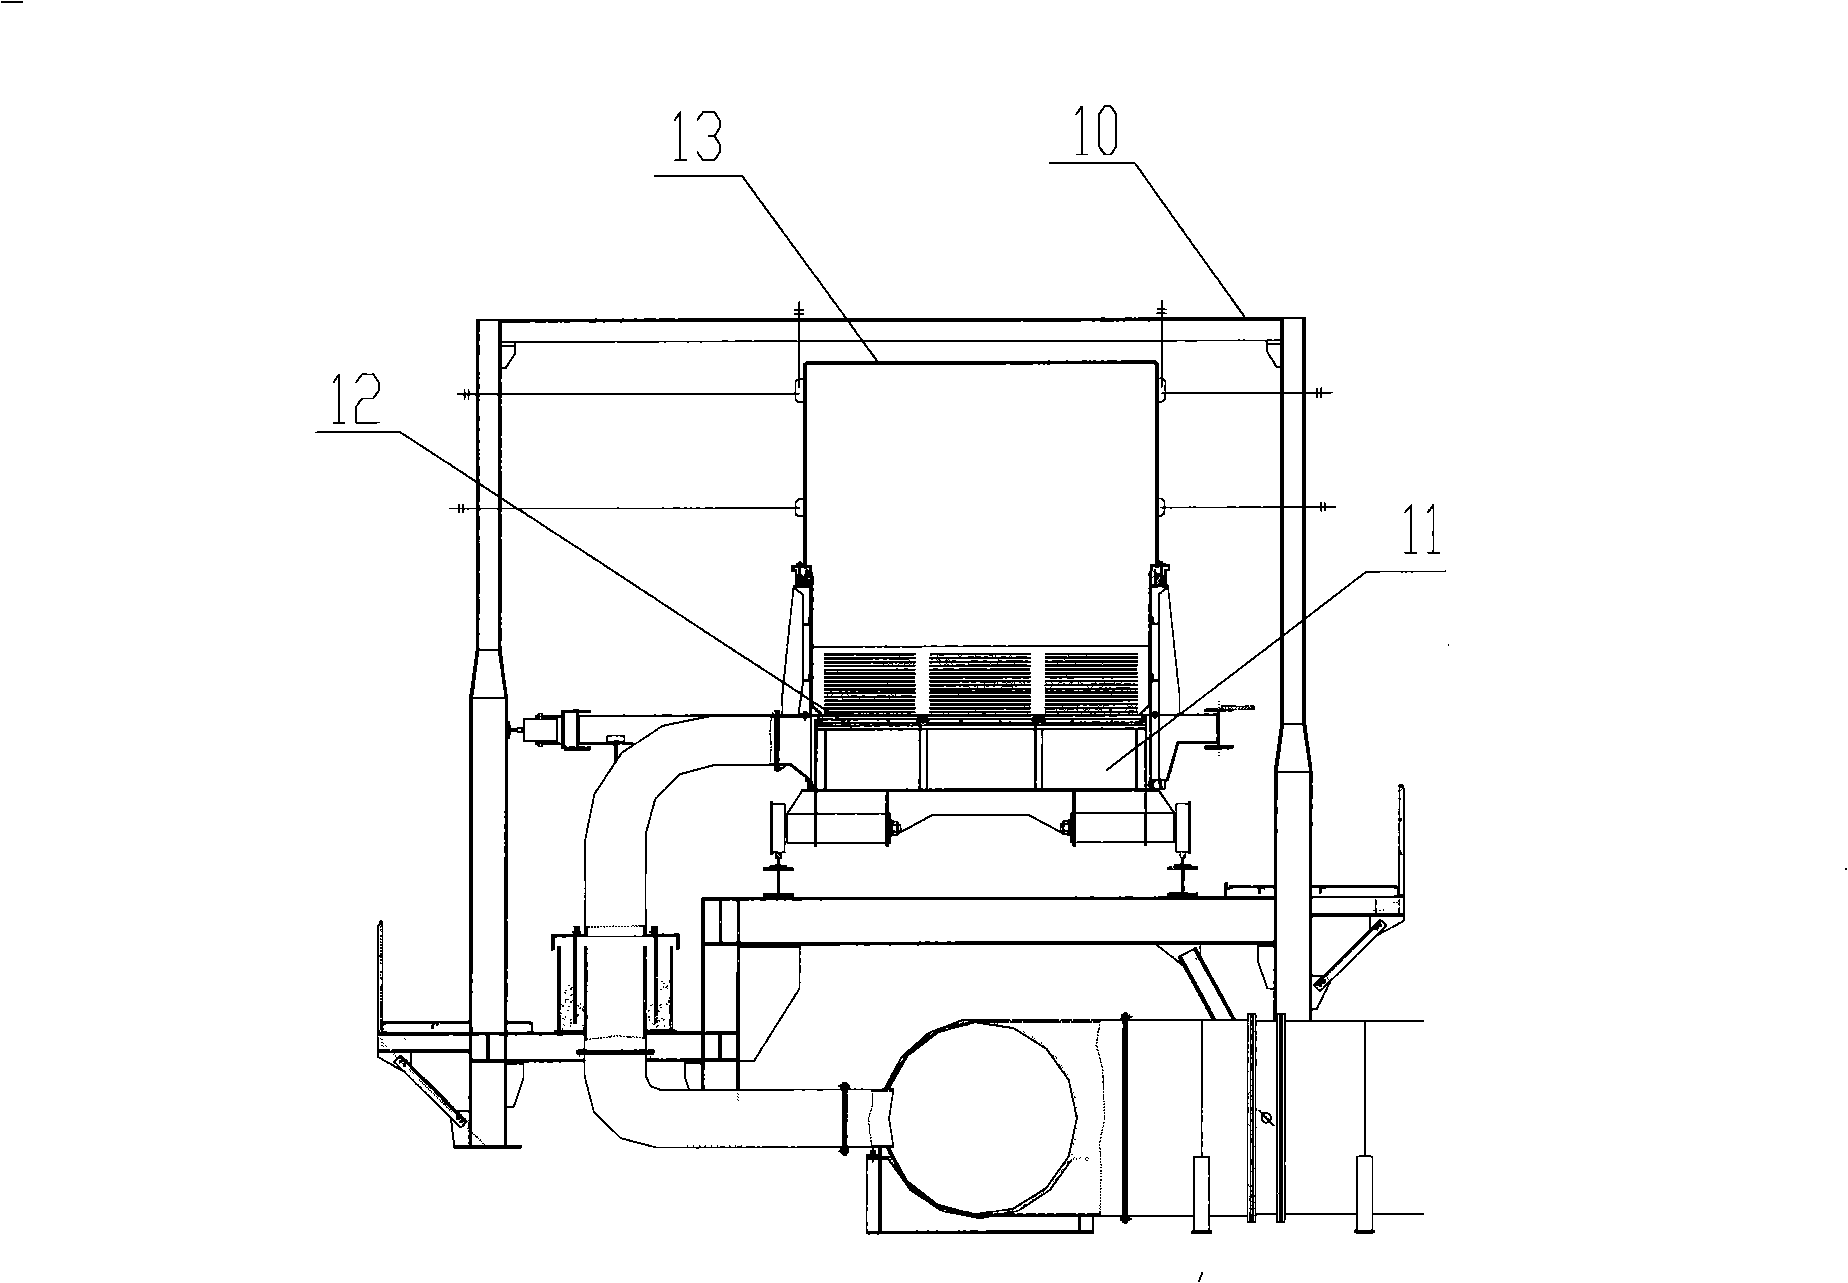 Air input system, annular air duct and annular fluid bath of circular cooler